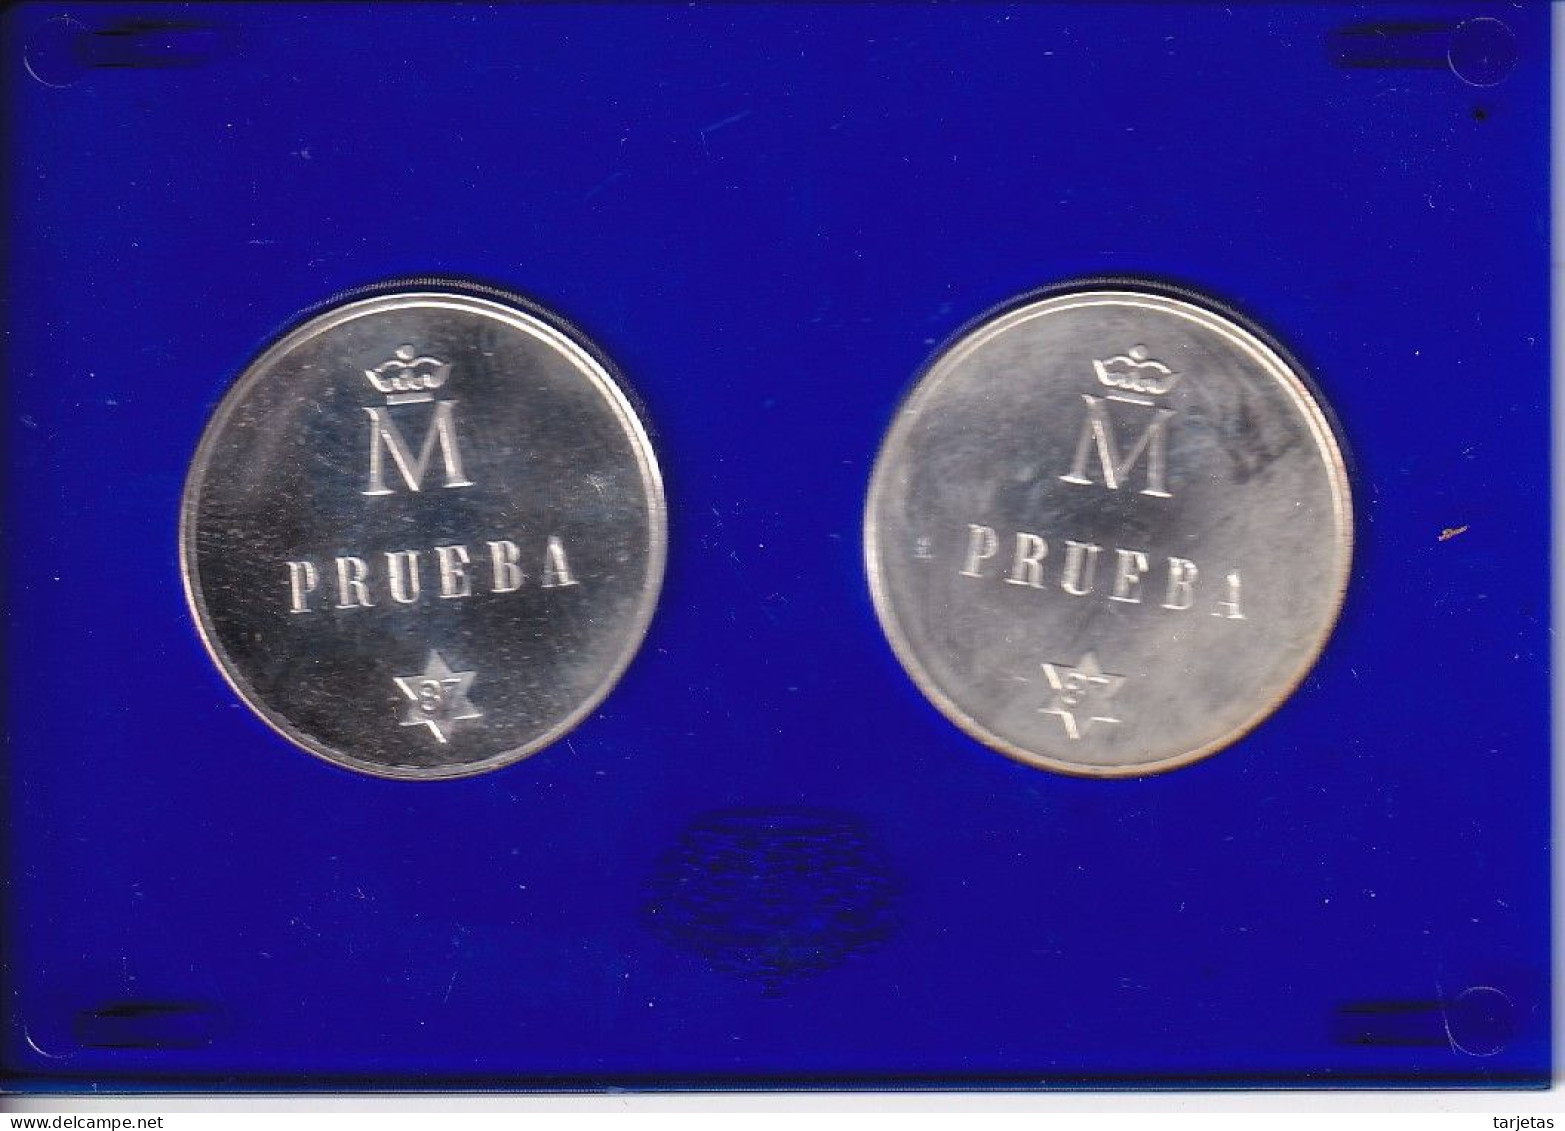 MONEDAS DE PLATA DE PRUEBA DE ESPAÑA DE 500 PESETAS DEL AÑO 1987 EN ESTUCHE ORIGINAL (COIN) - Mint Sets & Proof Sets